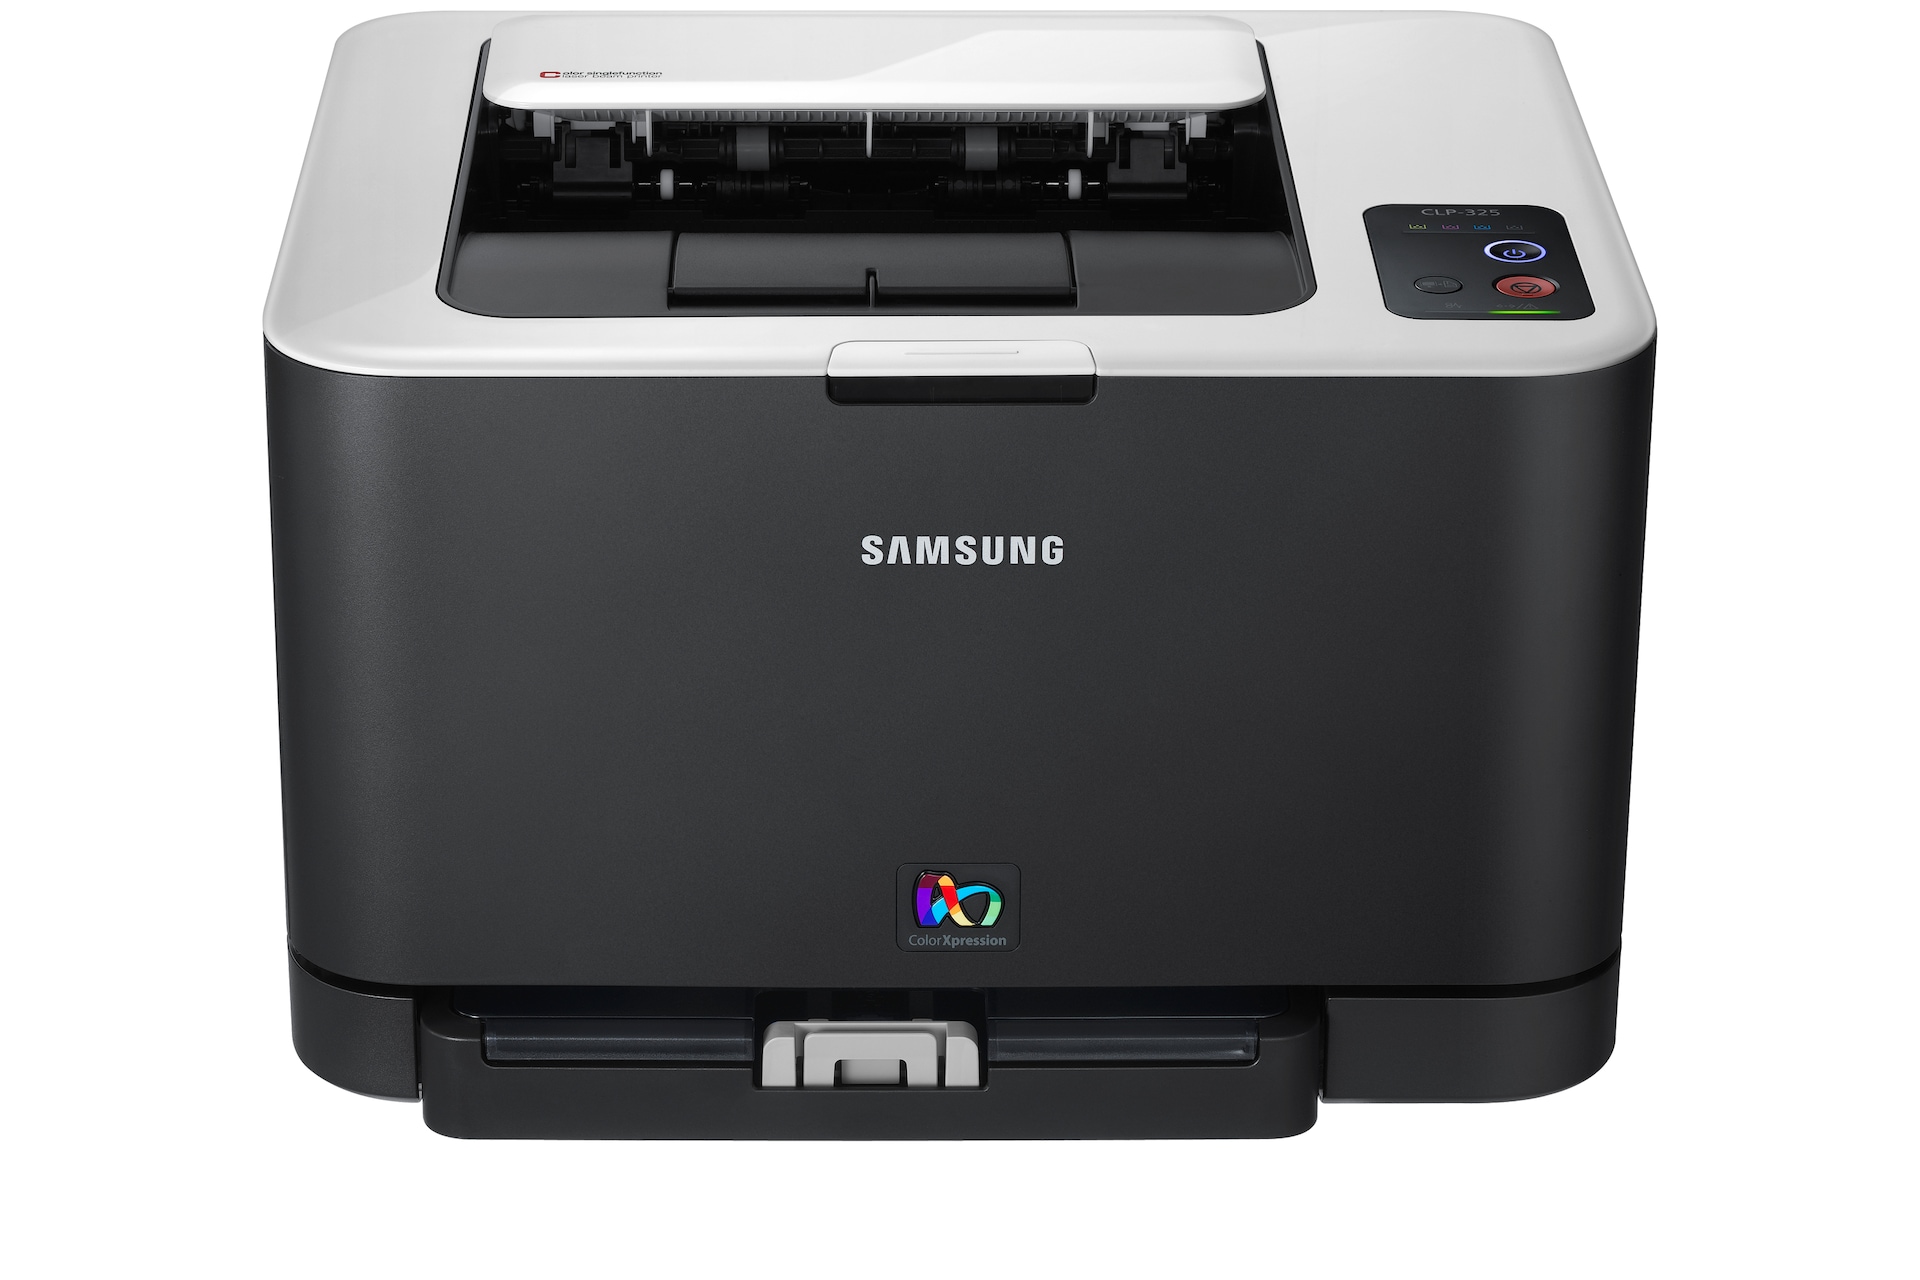 Samsung  315w Wireless Color Laser Printer on Clp 325w Color Laser Printer   Overzicht   Samsung